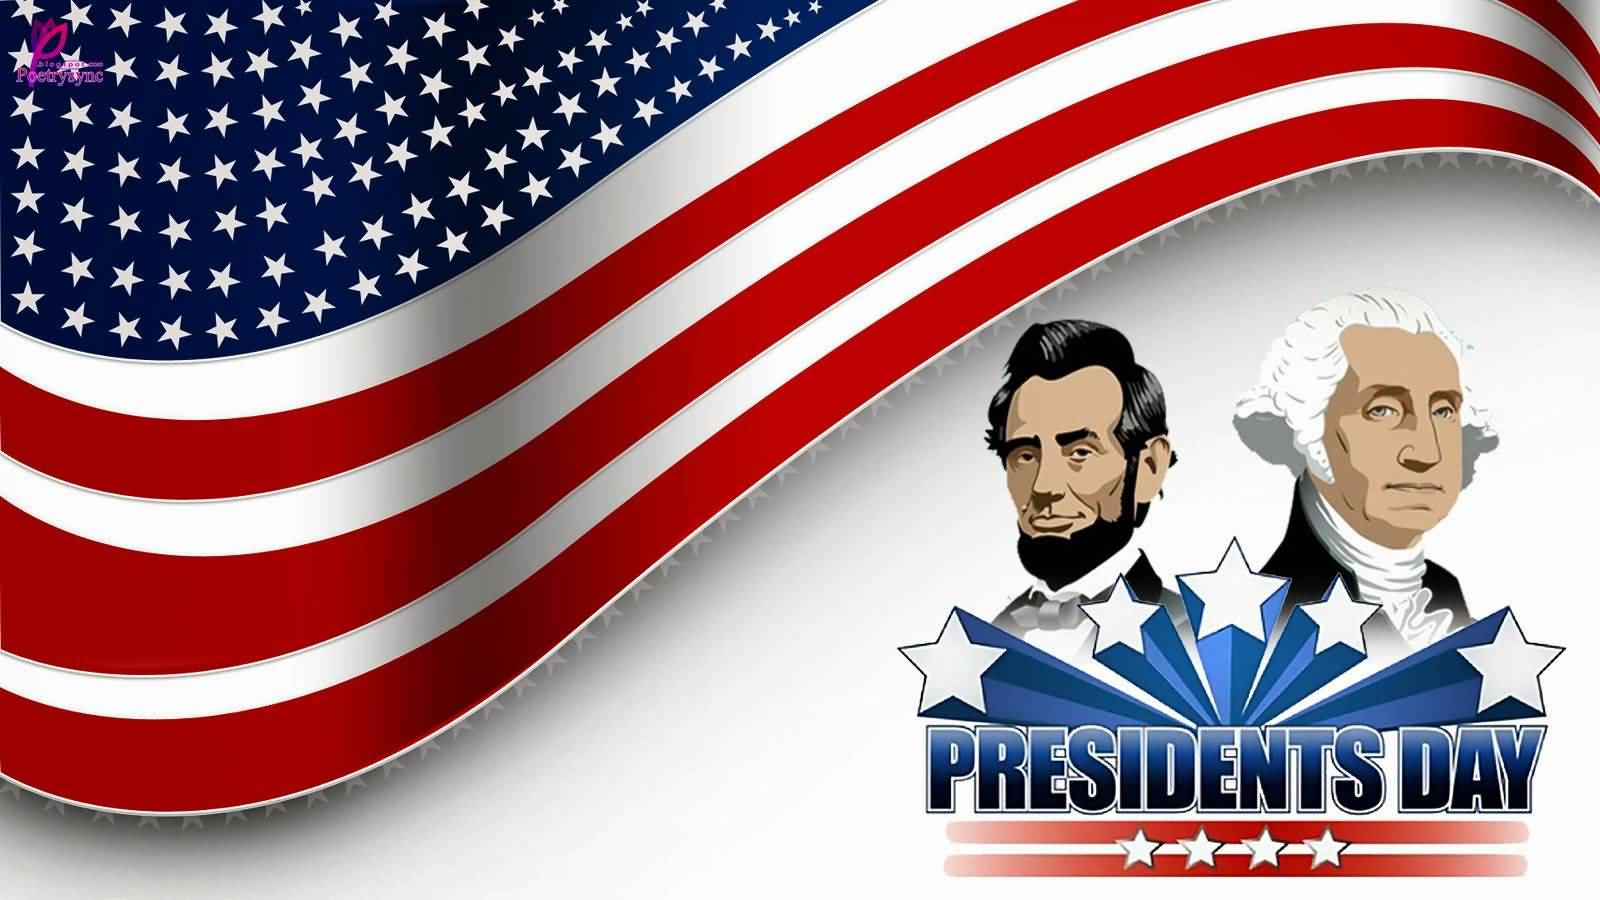 Presidents Day 2017 Illustration